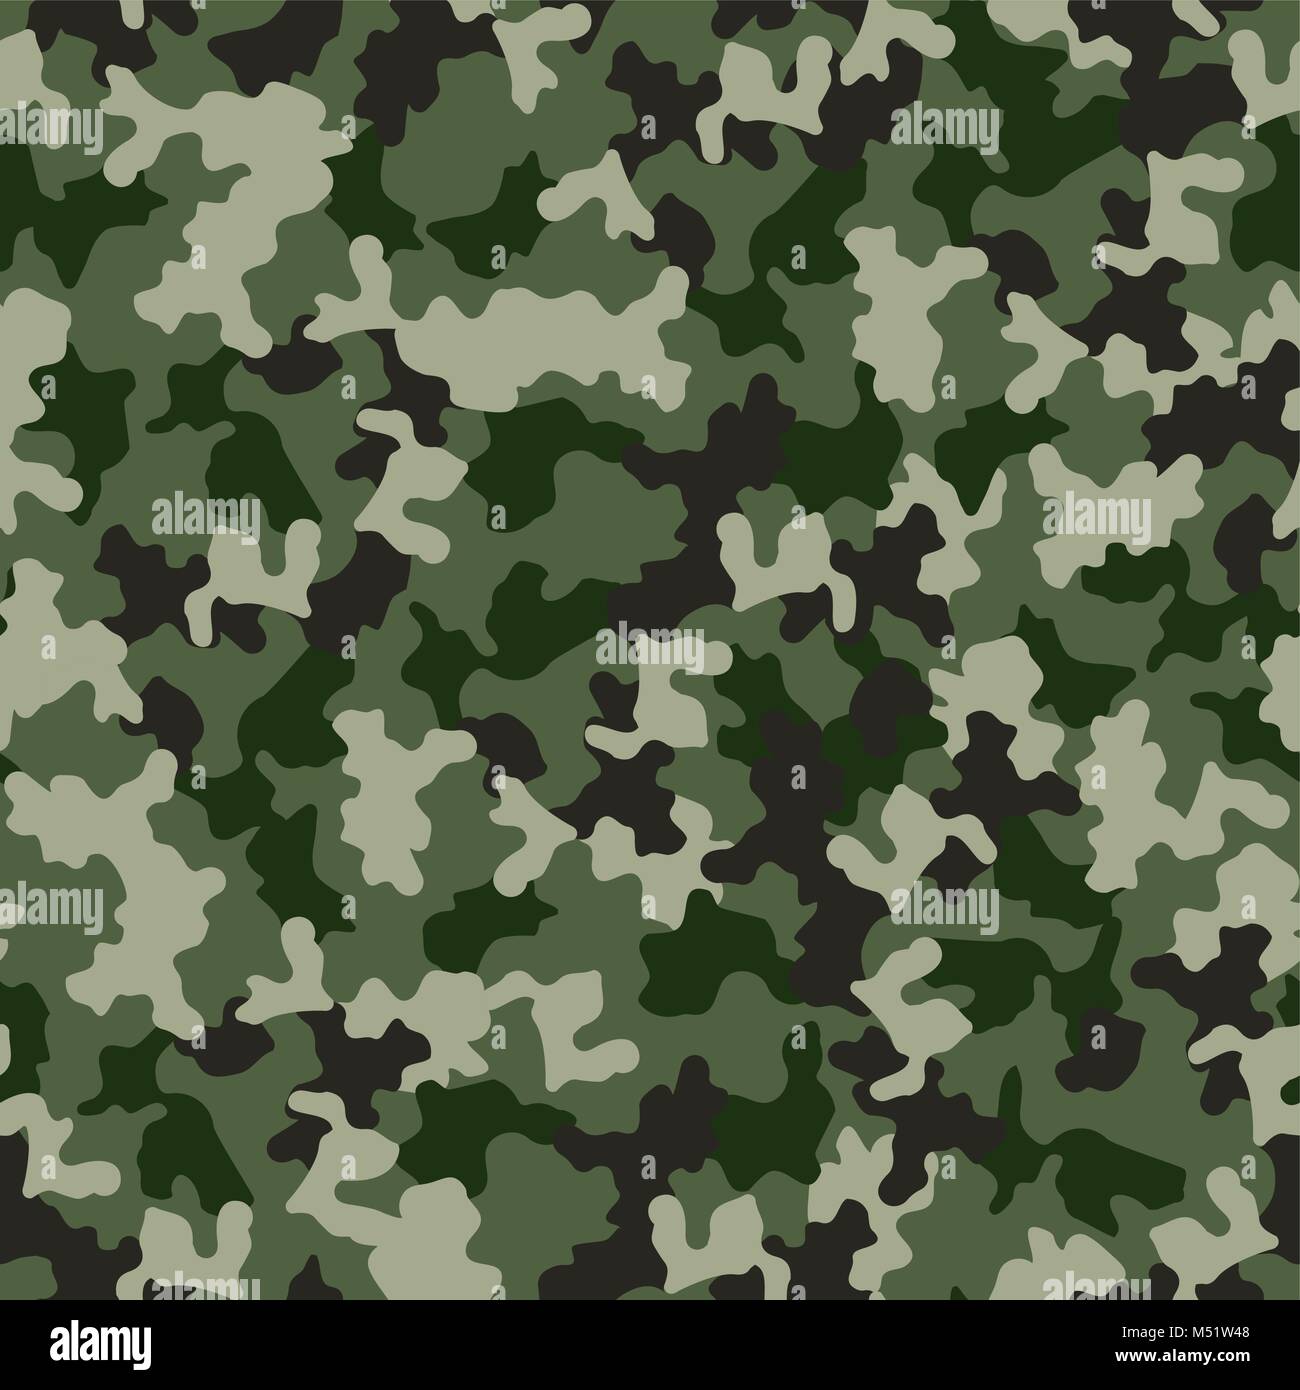 https://c8.alamy.com/comp/M51W48/green-camouflage-seamless-pattern-military-fashion-fabric-design-vector-M51W48.jpg